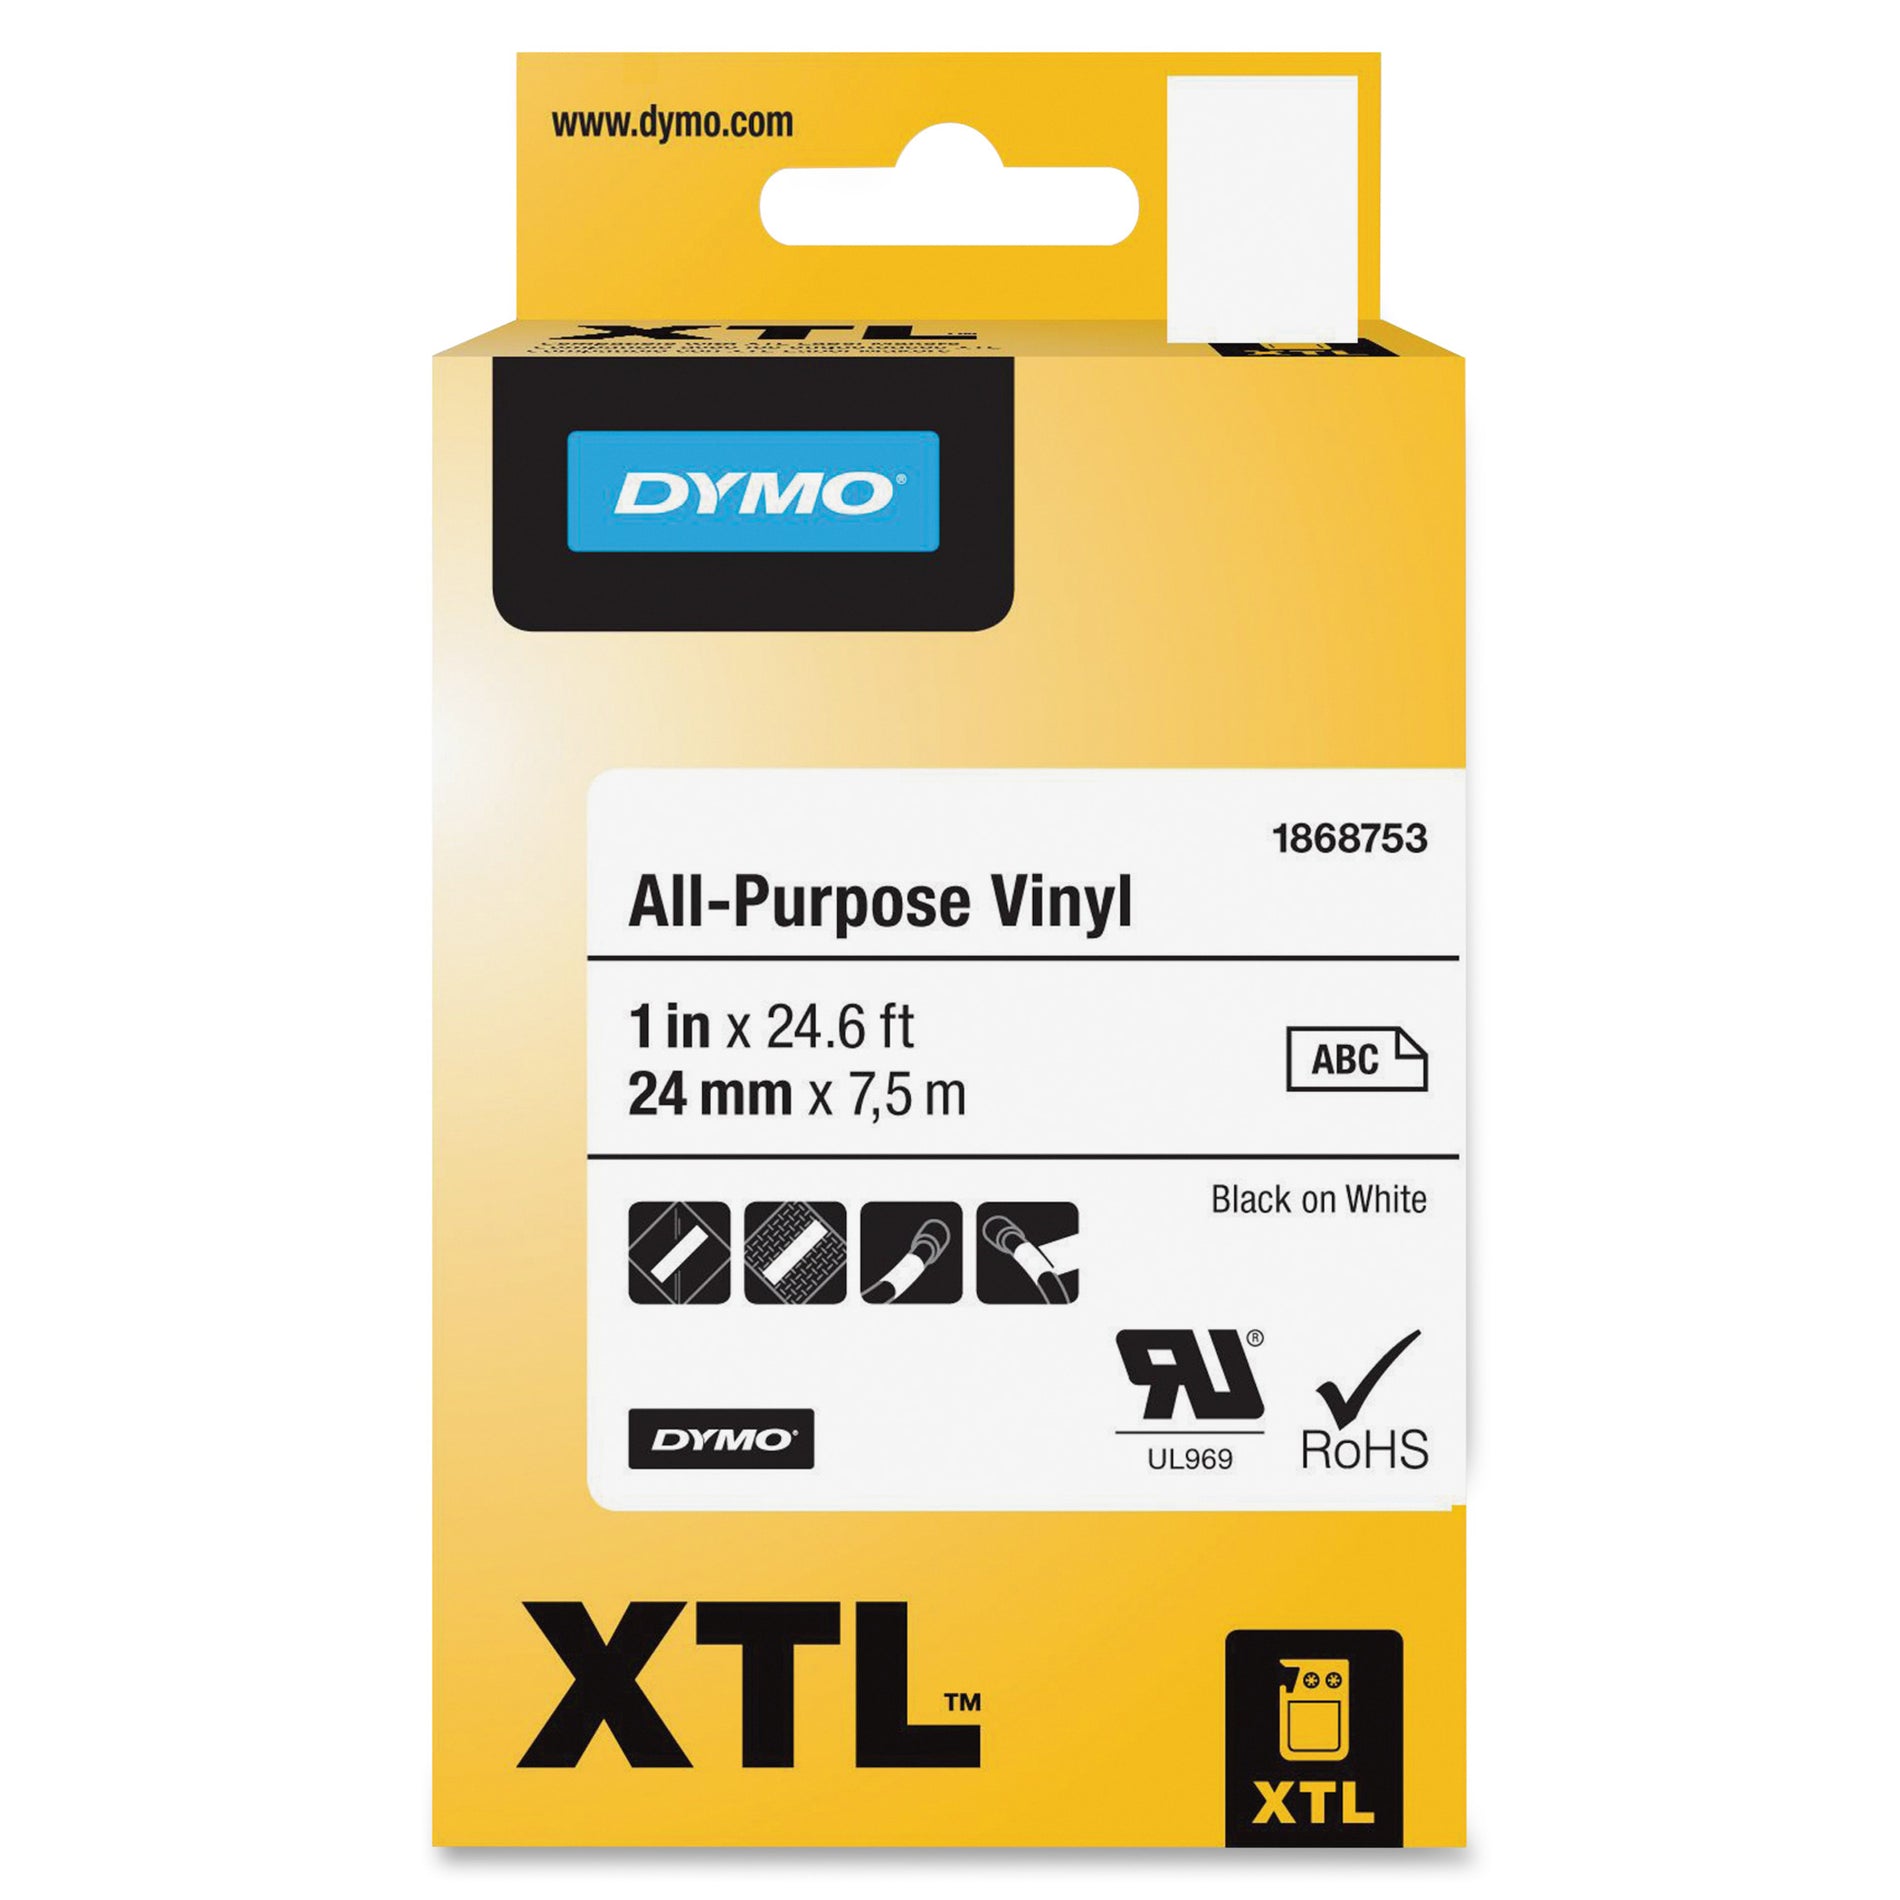 Dymo 1868753 XTL All-purpose Vinyl Labels, Temperature Resistant, Chemical Resistant, Oil Resistant